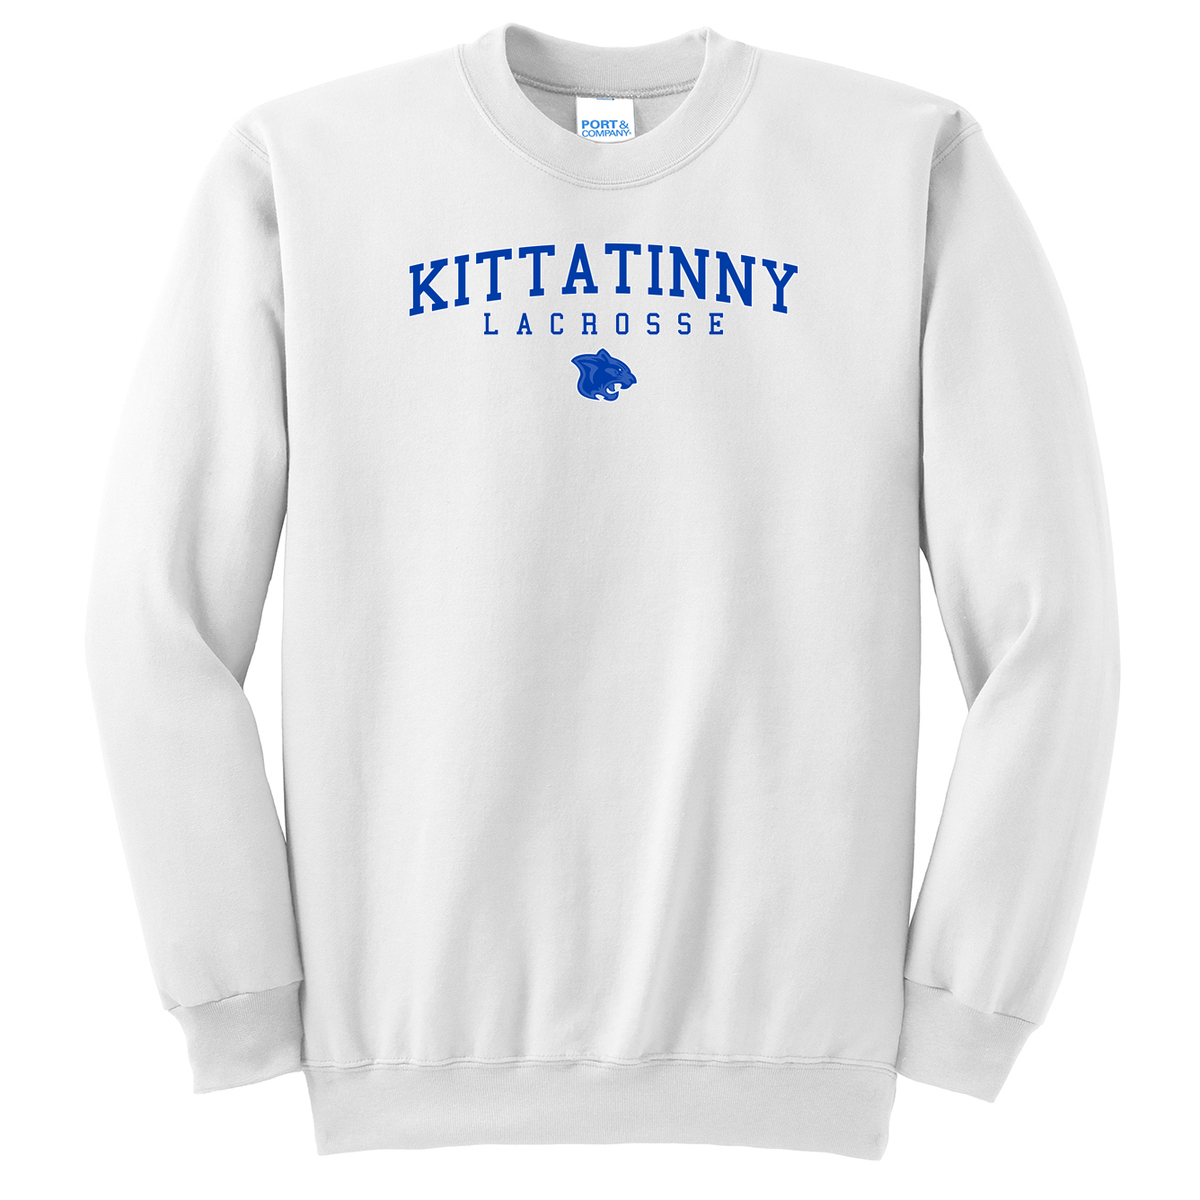 Kittatinny Lacrosse Crew Neck Sweater